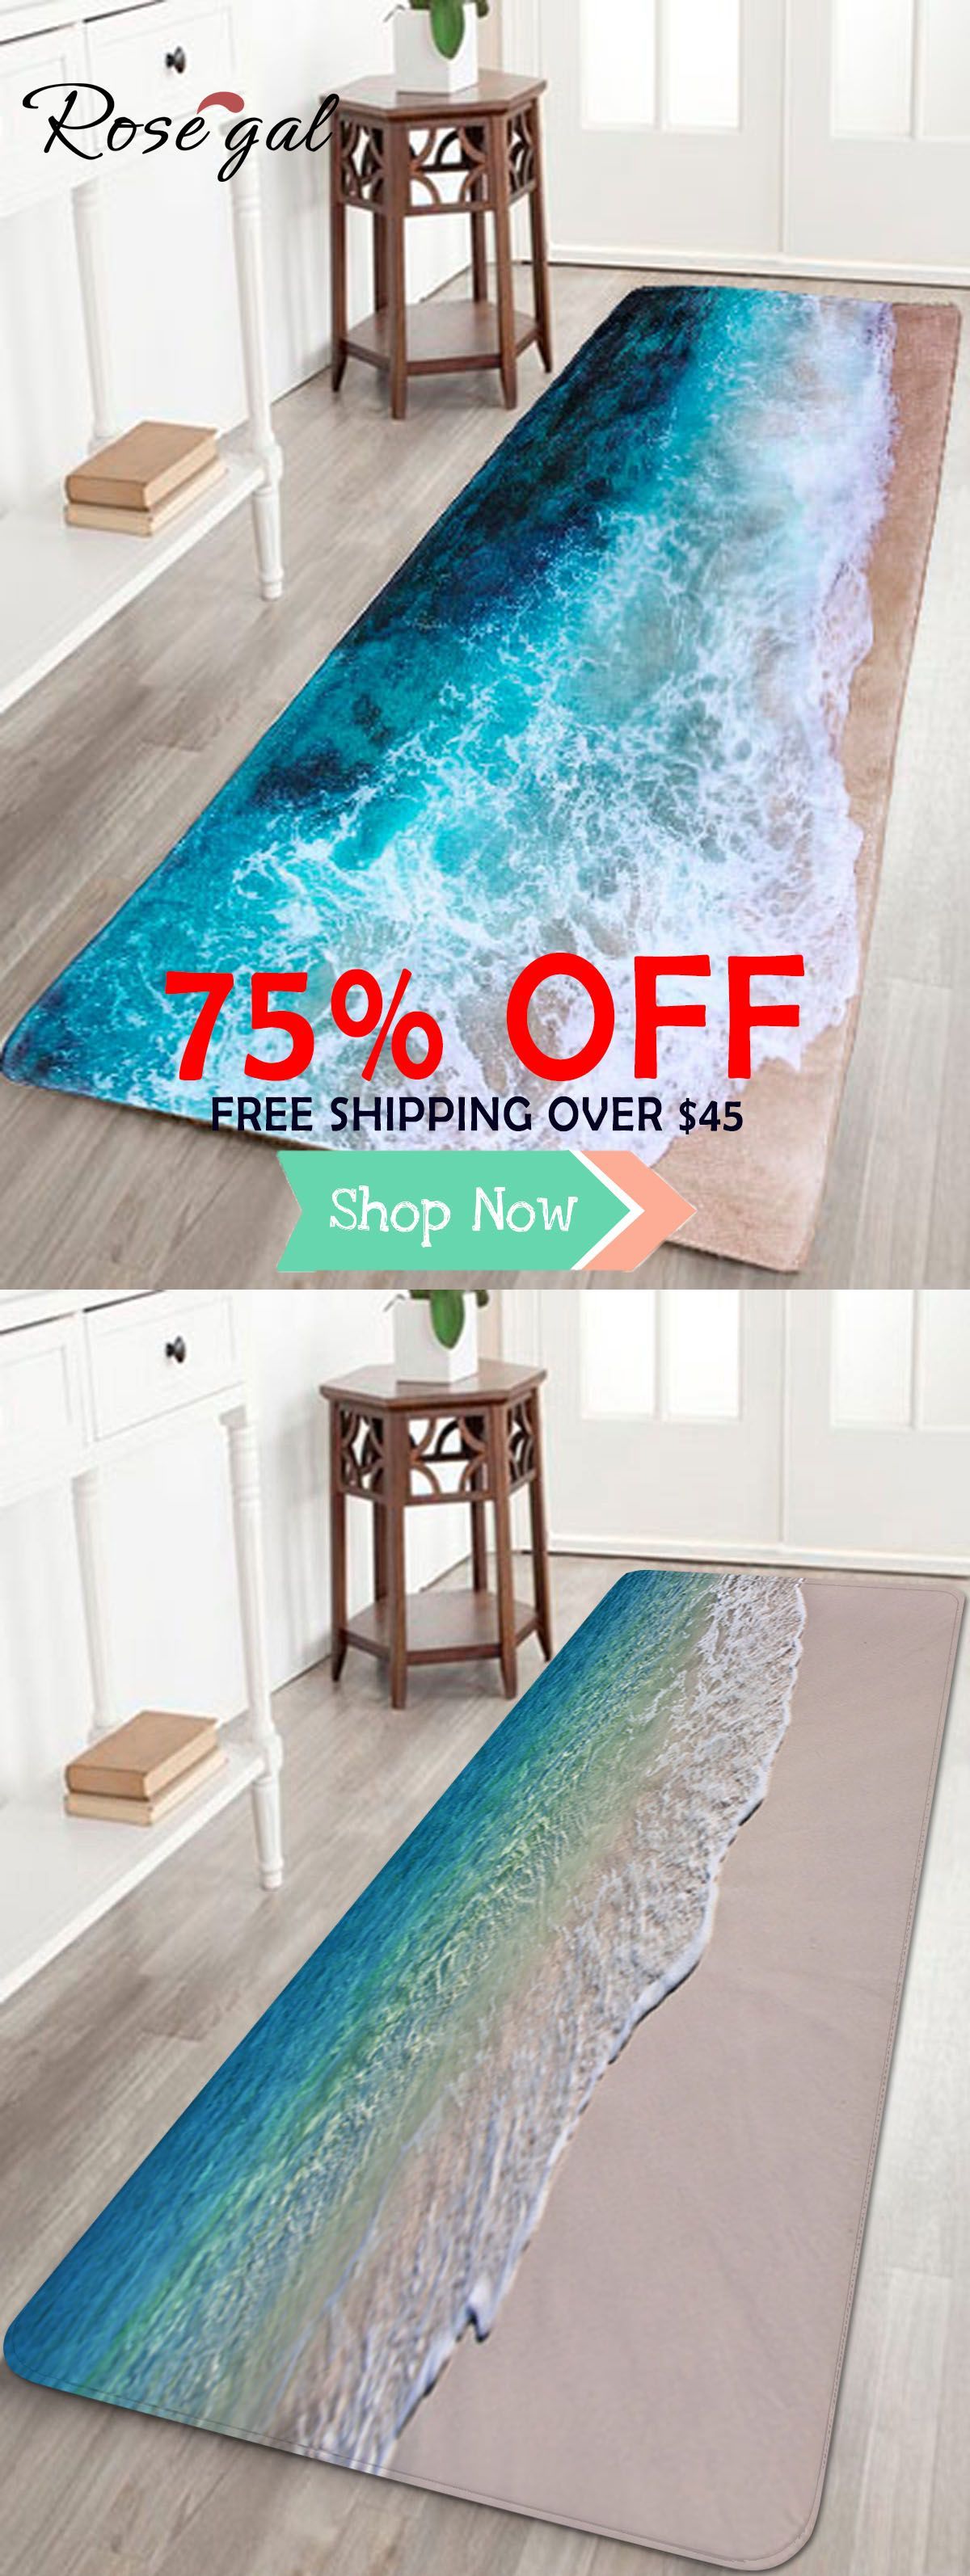 Rosegal beach print area rugs -   25 diy decor projects
 ideas